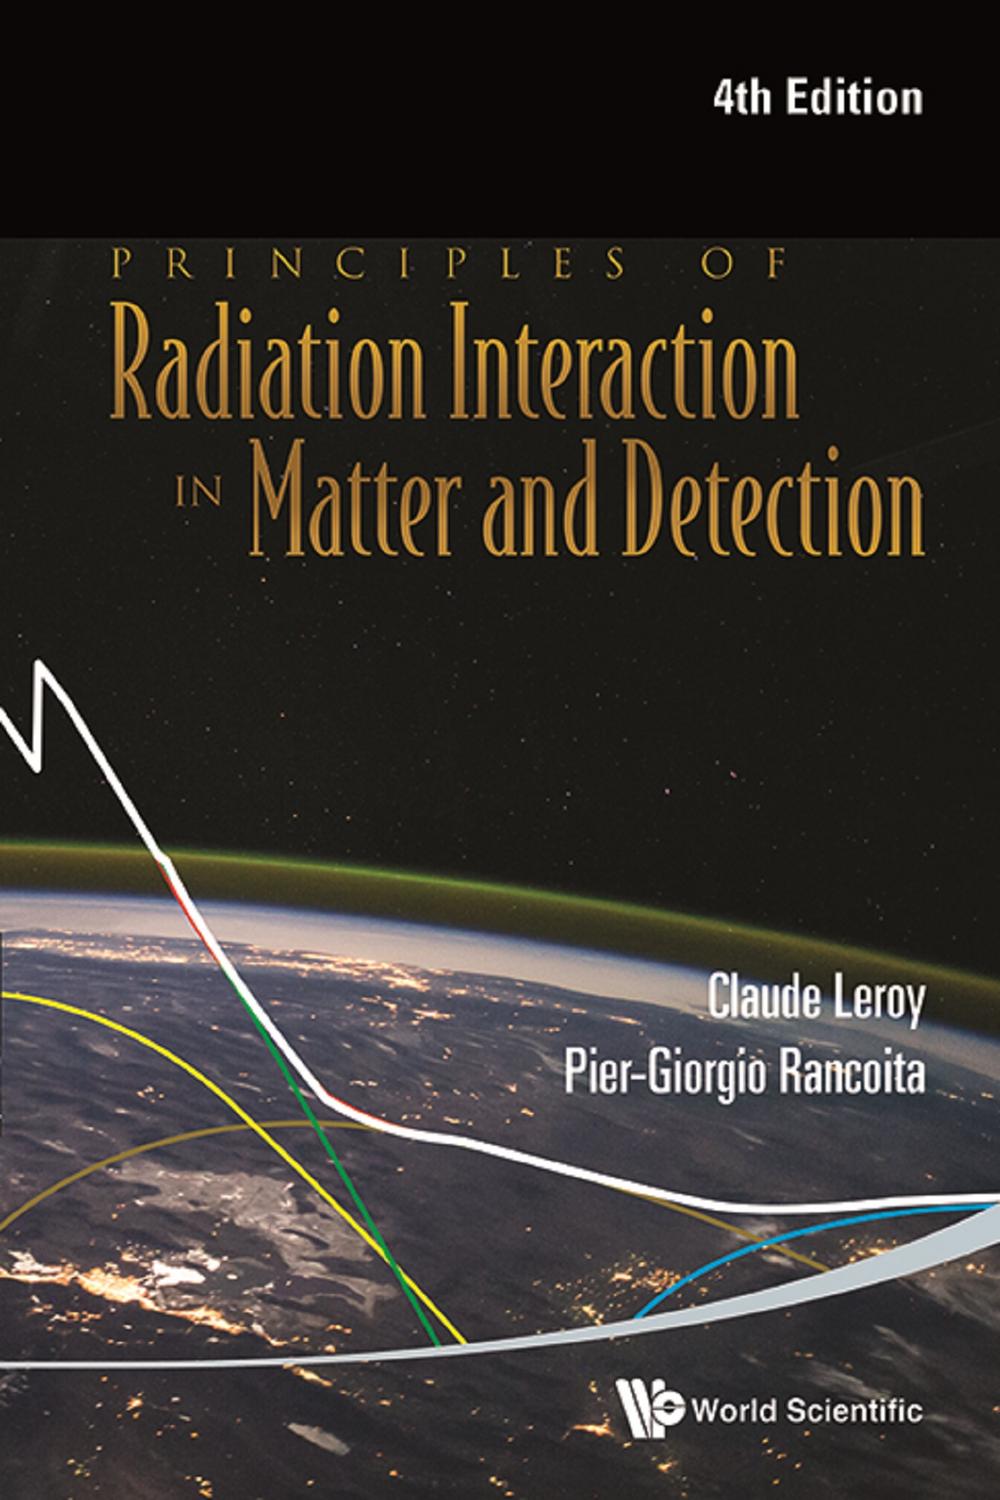 Principles Of Radiation Interaction In Matter And Detection (4th Edition) - Claude Leroy, Pier-Giorgio Rancoita